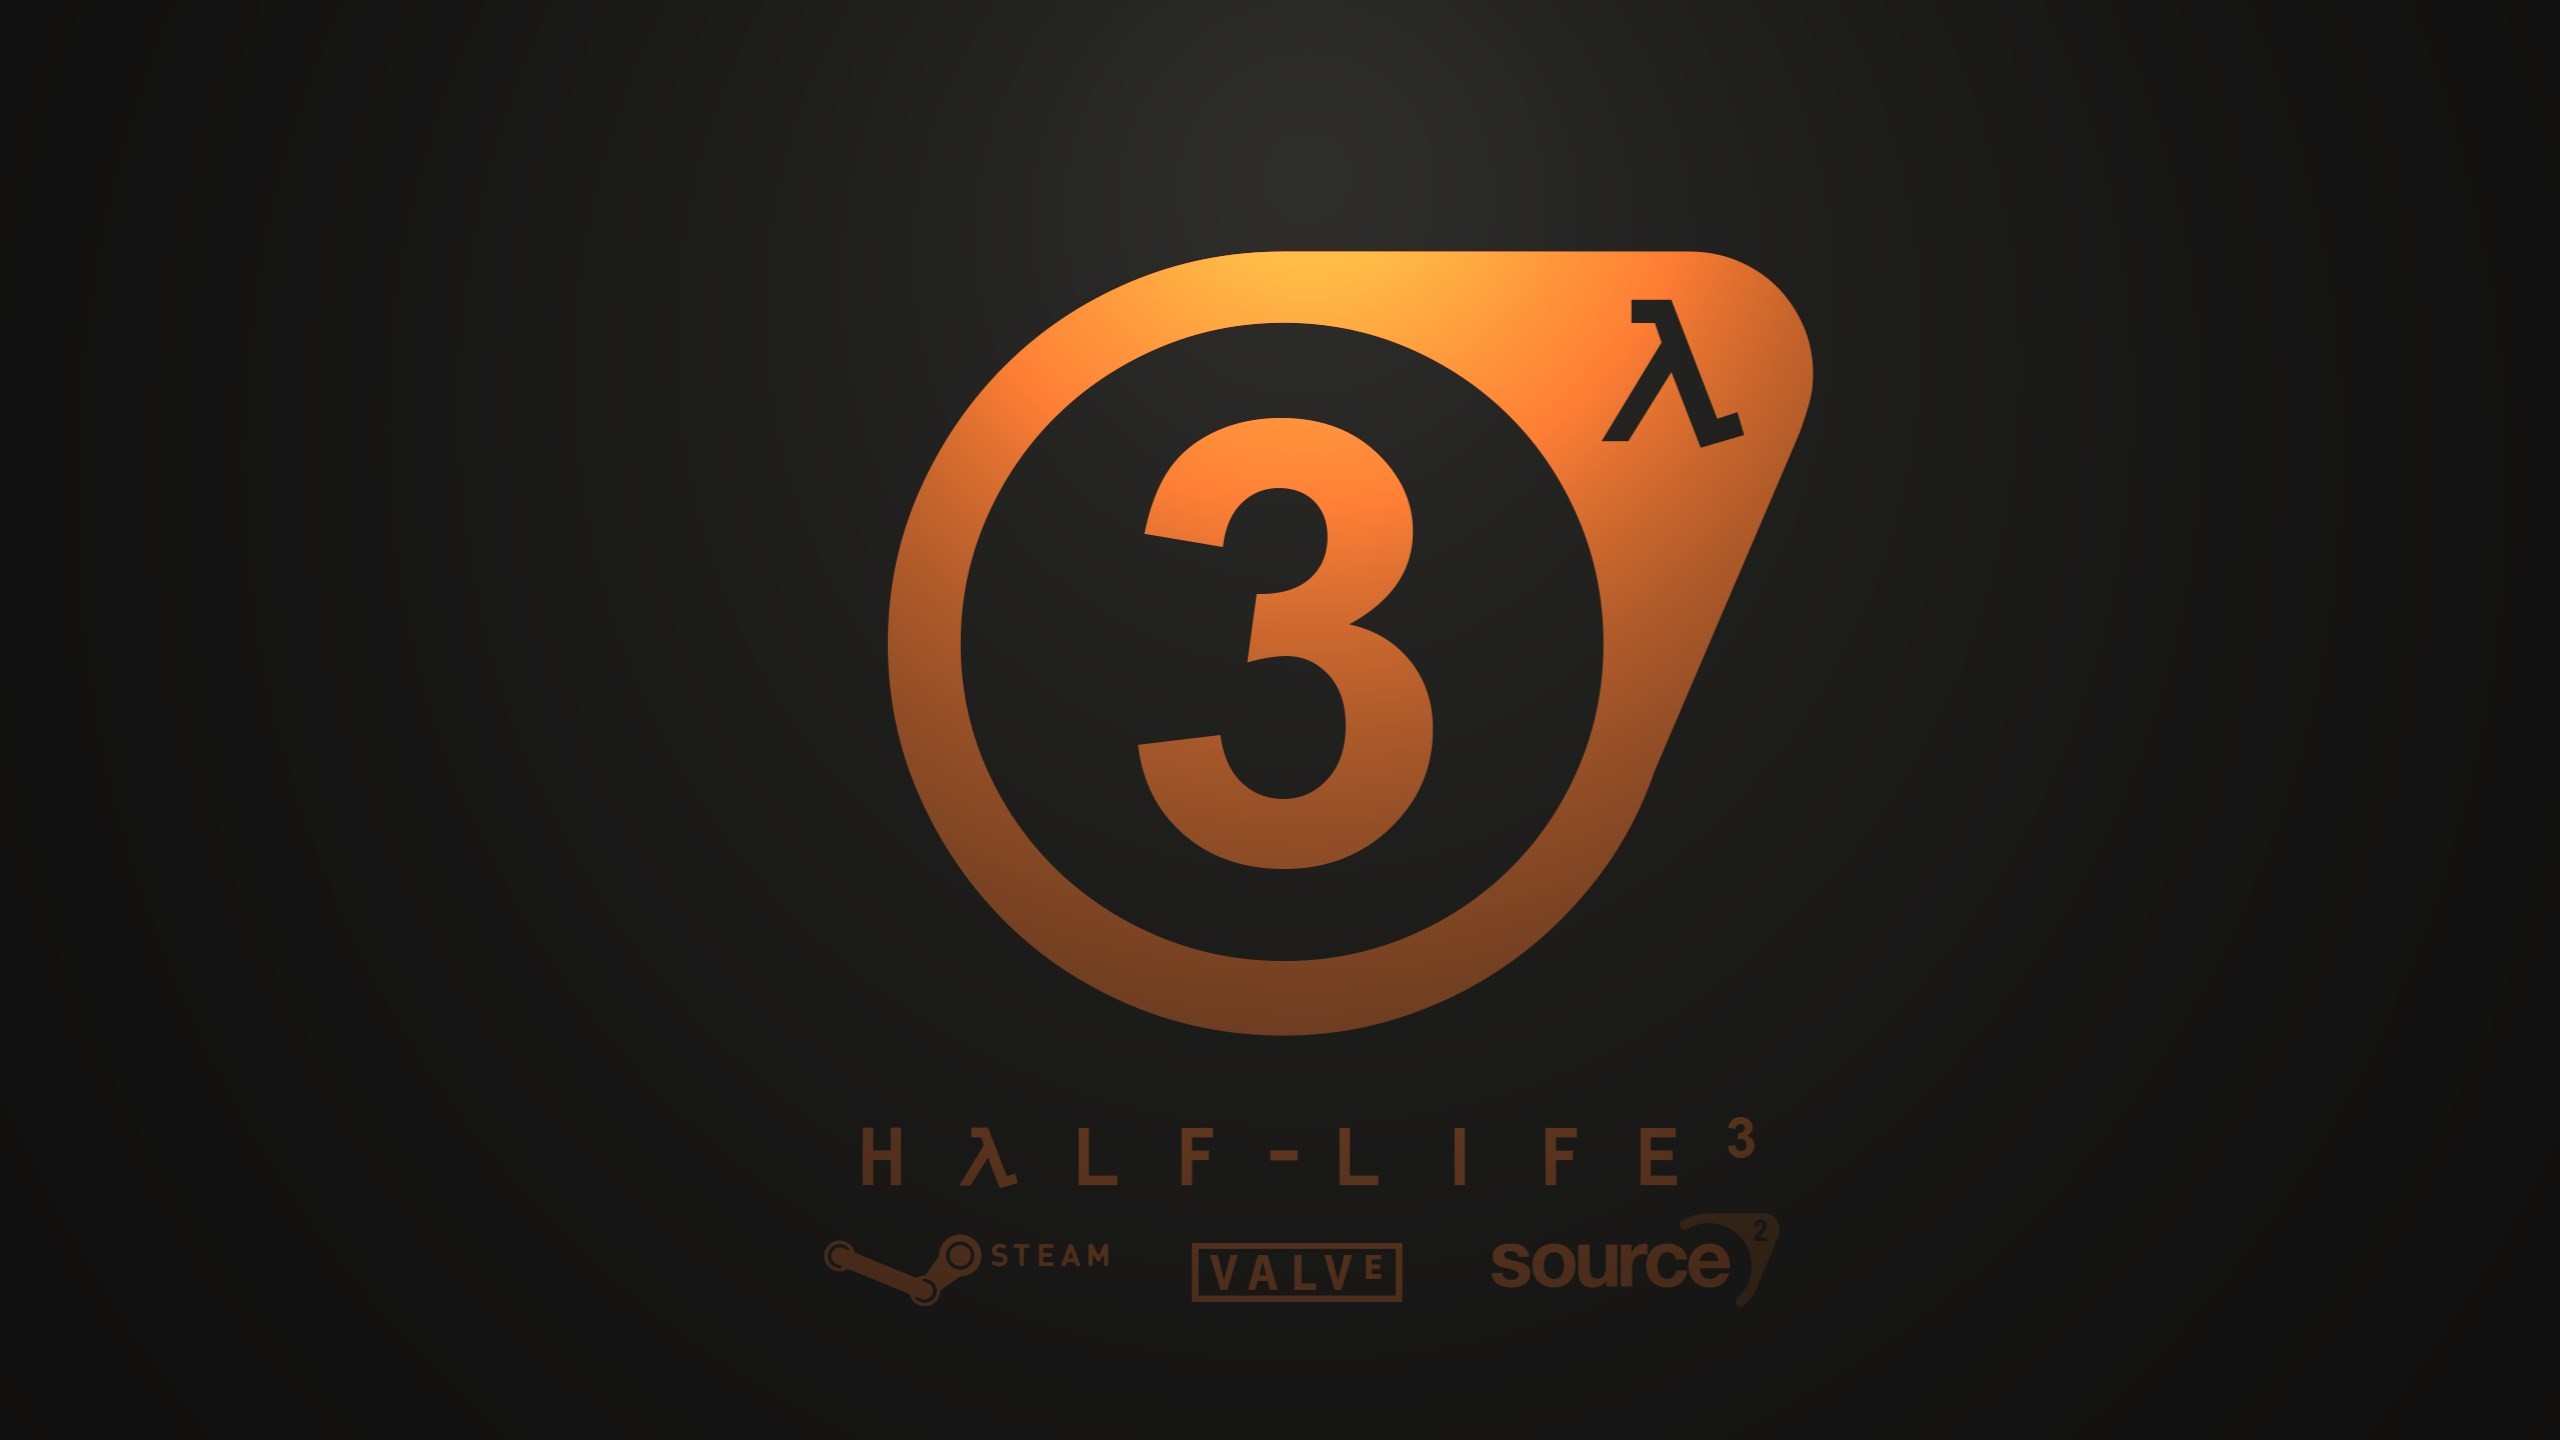 2560x1440 ... ball is life wallpaper iphone Â· half life 3 logo ...